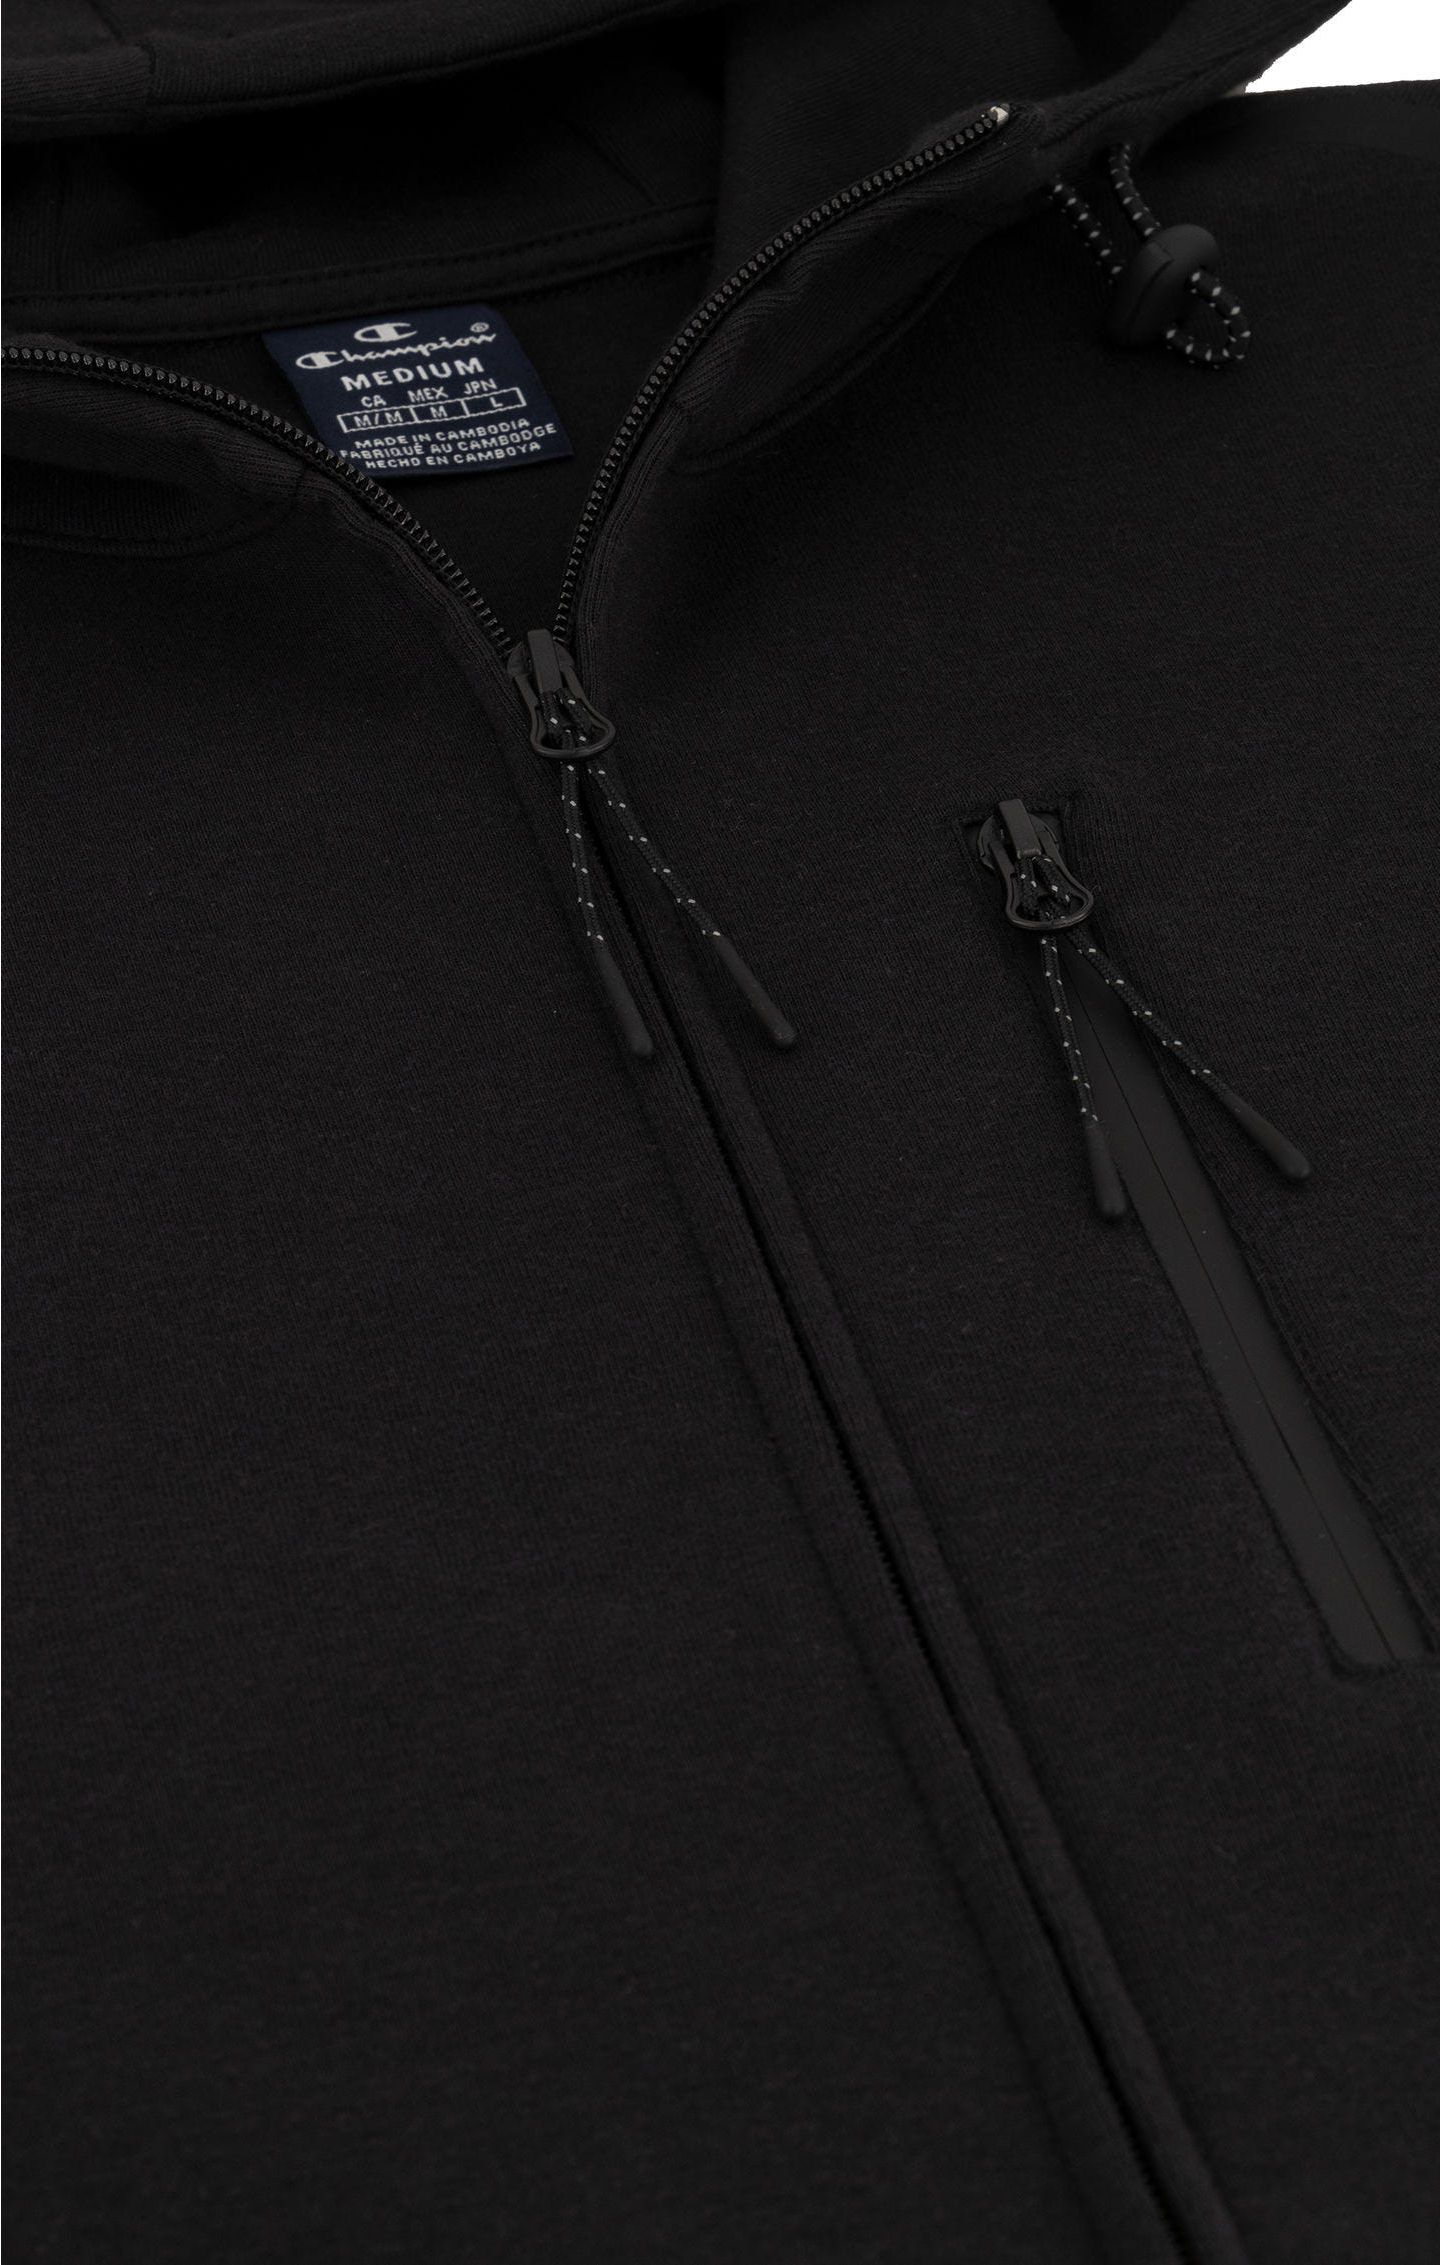 Mens Pocket detail Full Zip Hooded Jacket